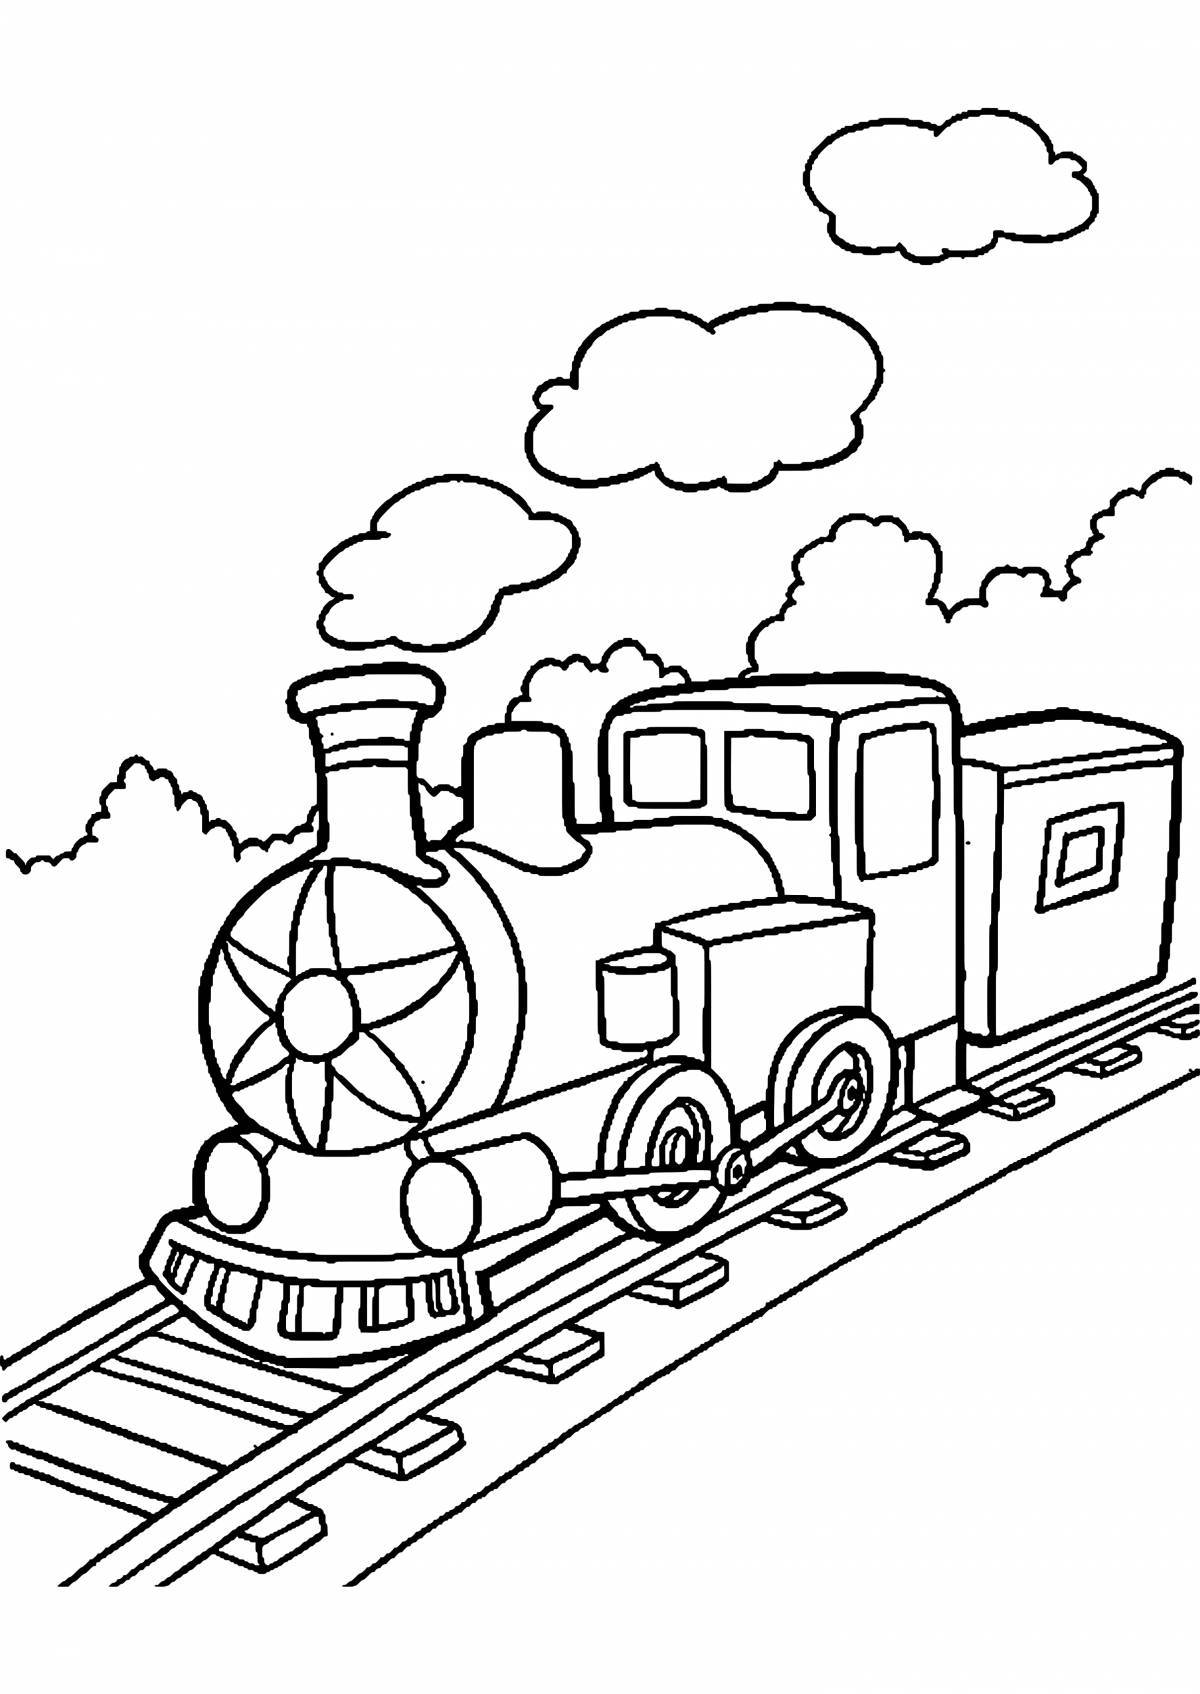 A fun train coloring book for preschoolers